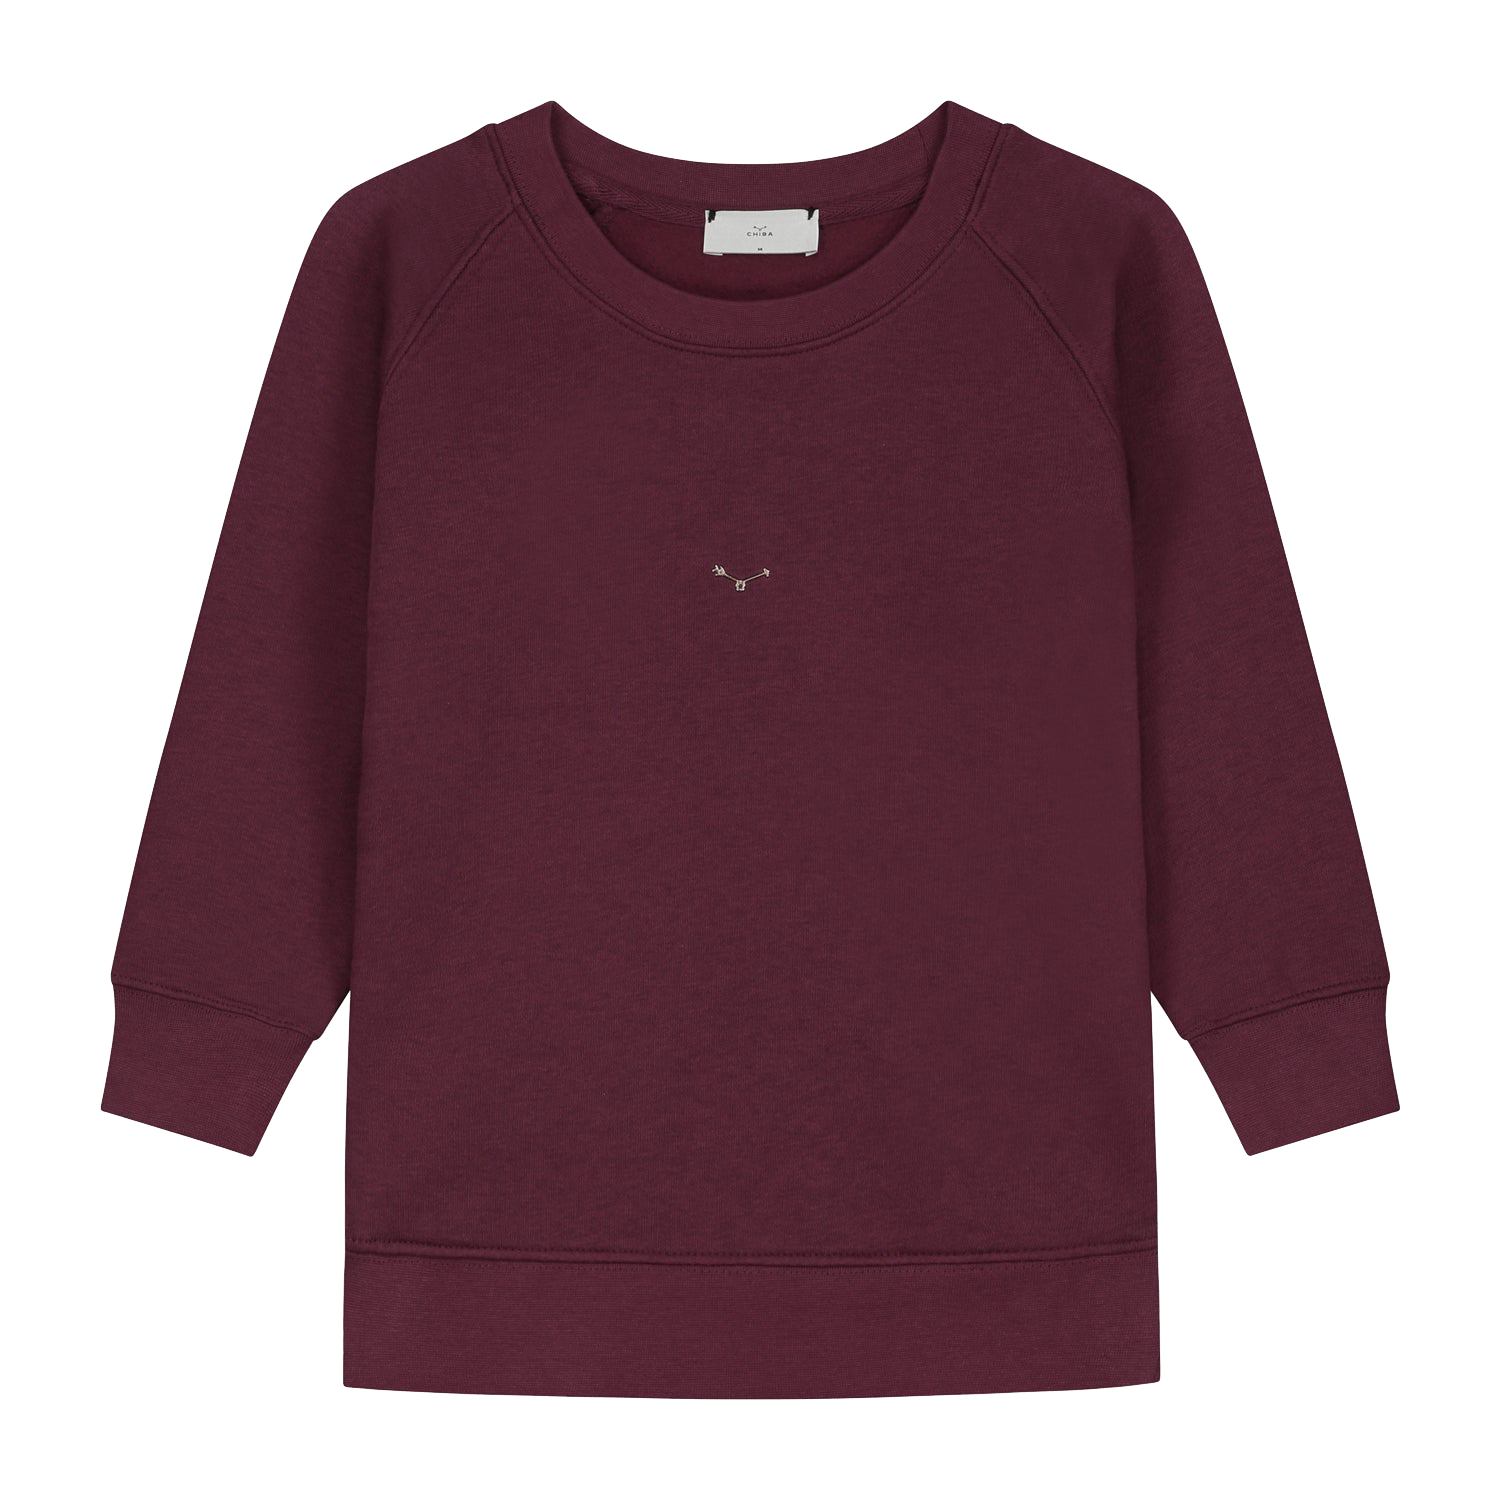 Burgundy Sweater - Kids